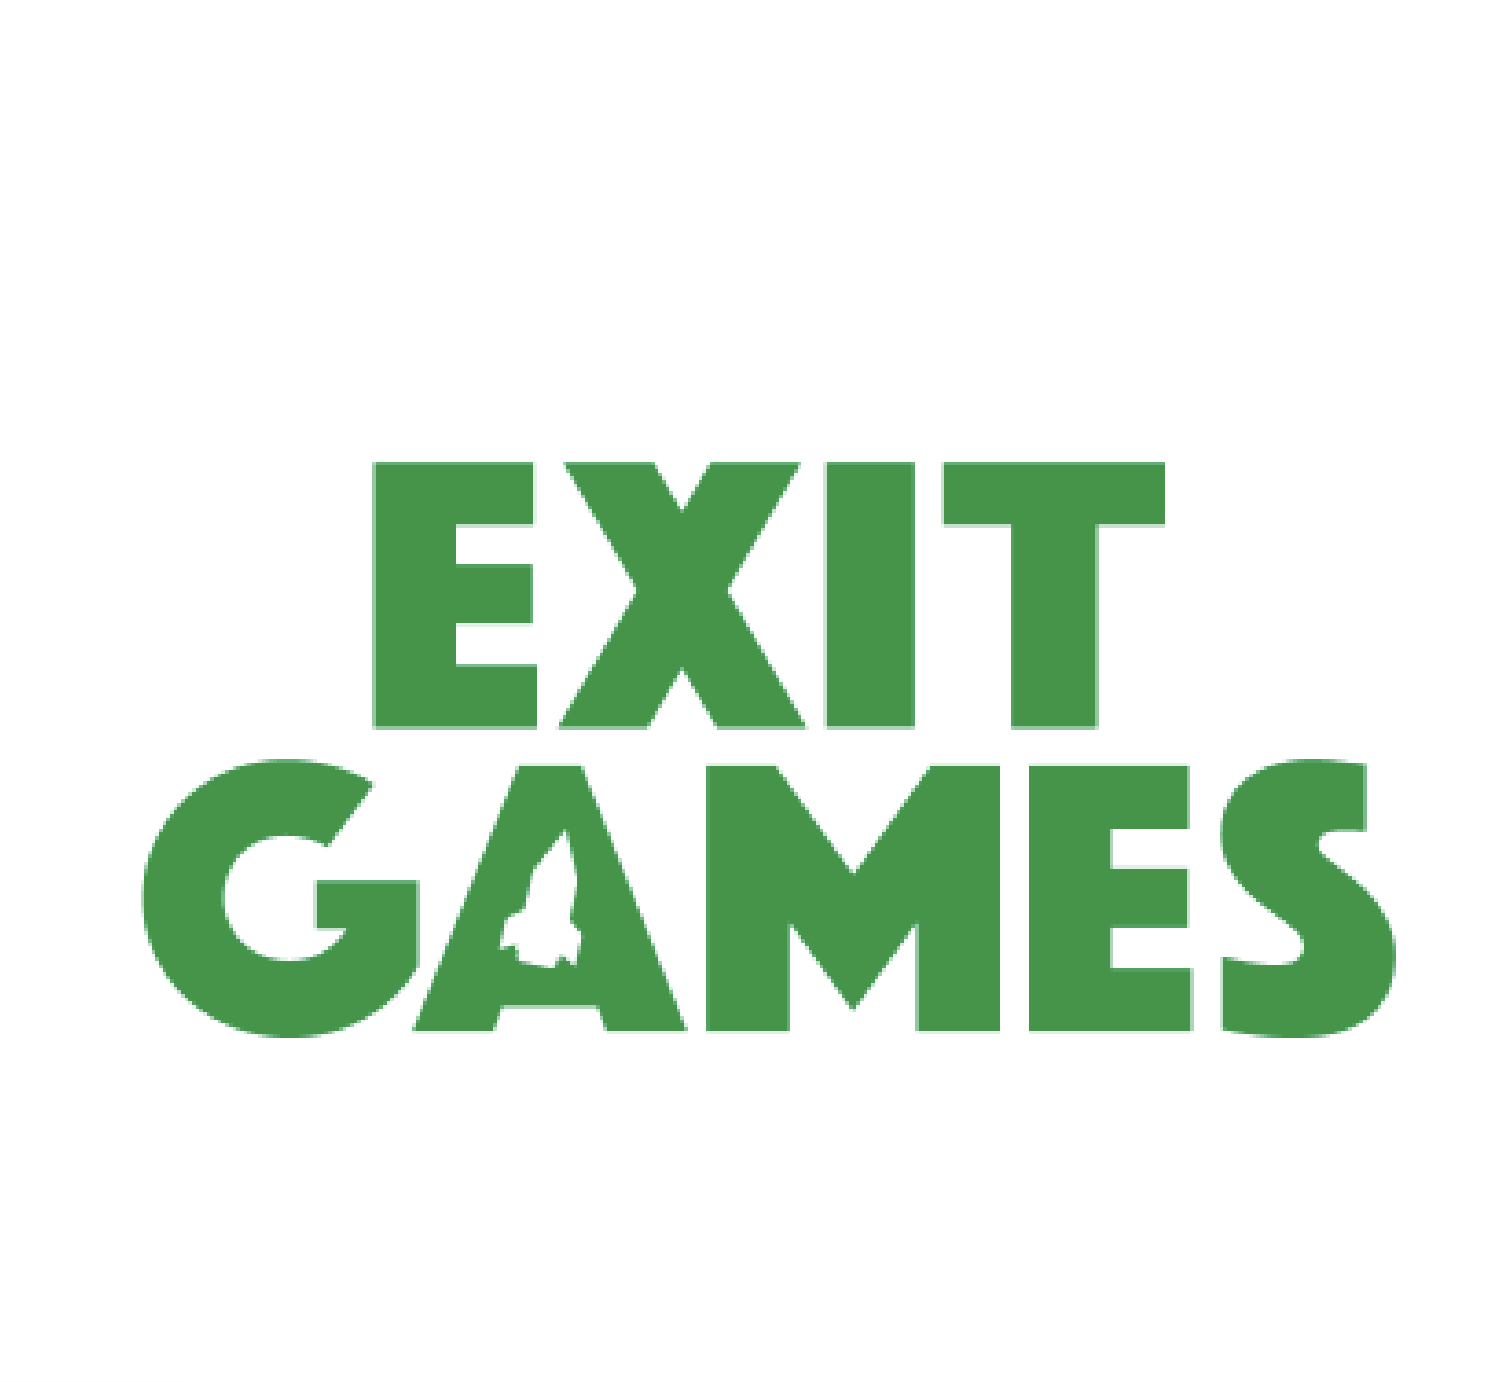 Exit 1 game. EXITGAMES логотип. Экзит геймс. Экзит геймс Москва. EXITGAMES В Москве.